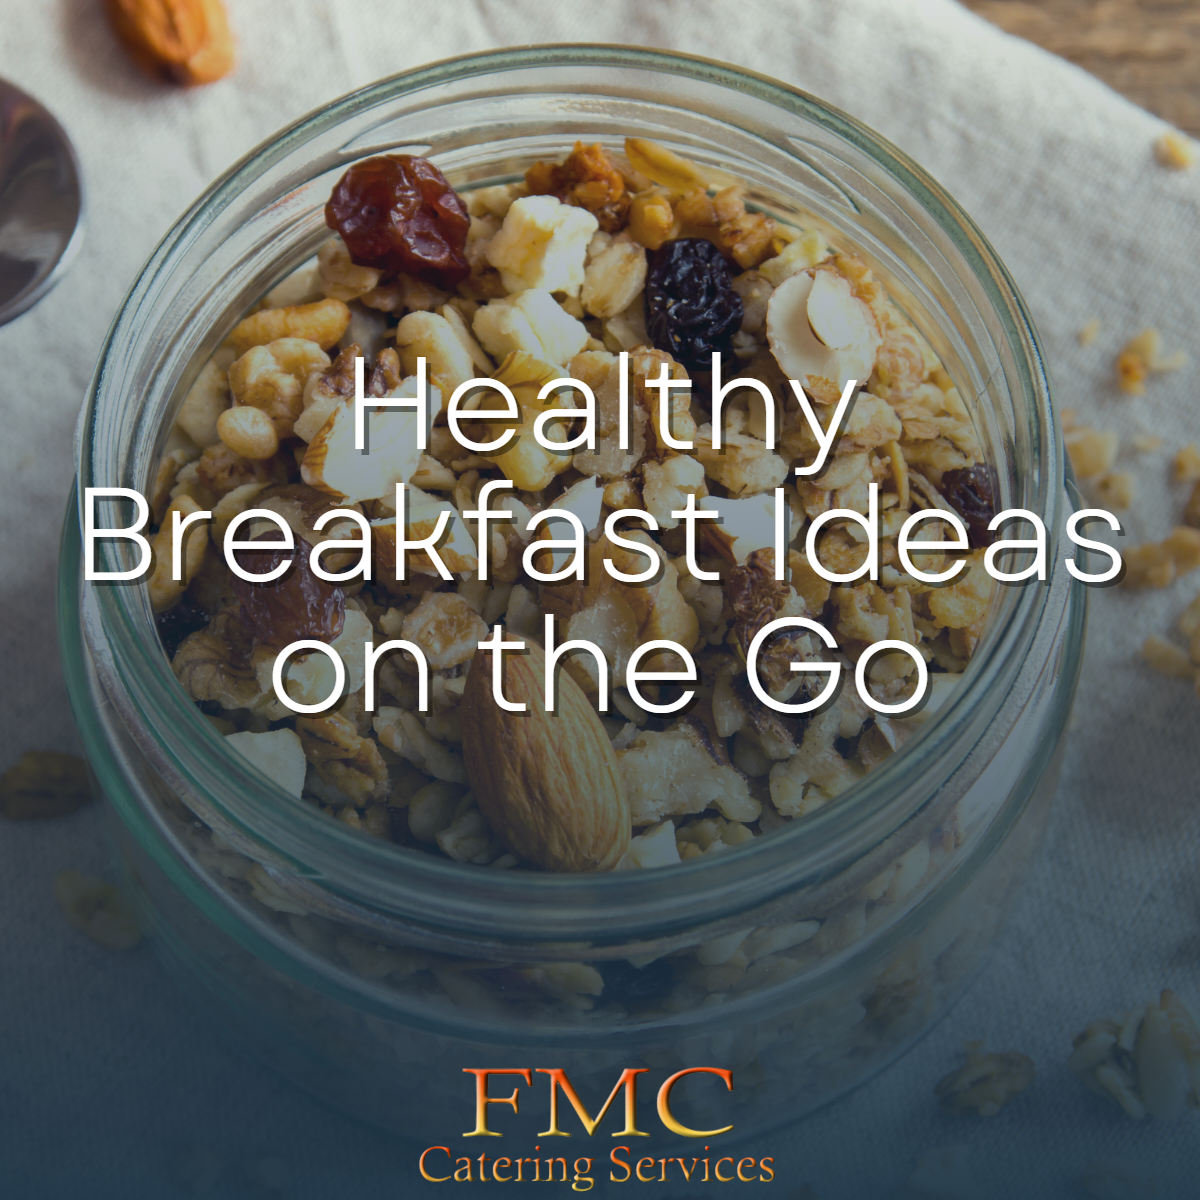 Granola - Healthy Breakfast Ideas on the Go